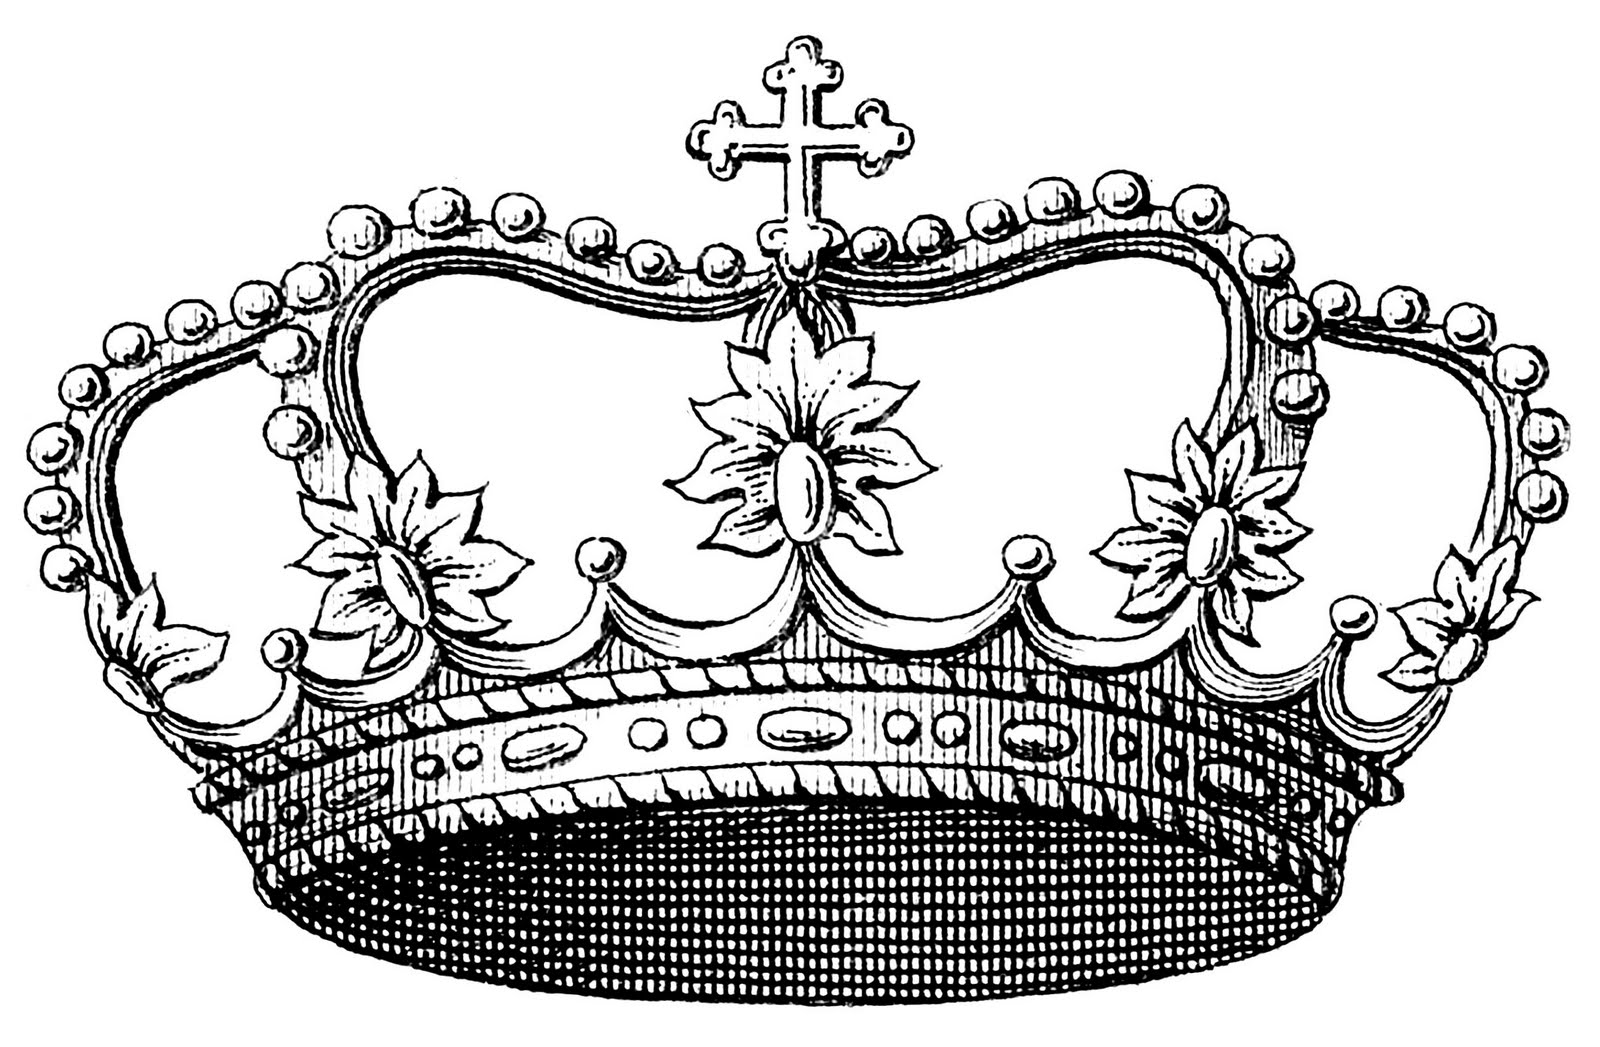 Vintage Clip Art Image - Delicate Princess Crown - The Graphics Fairy